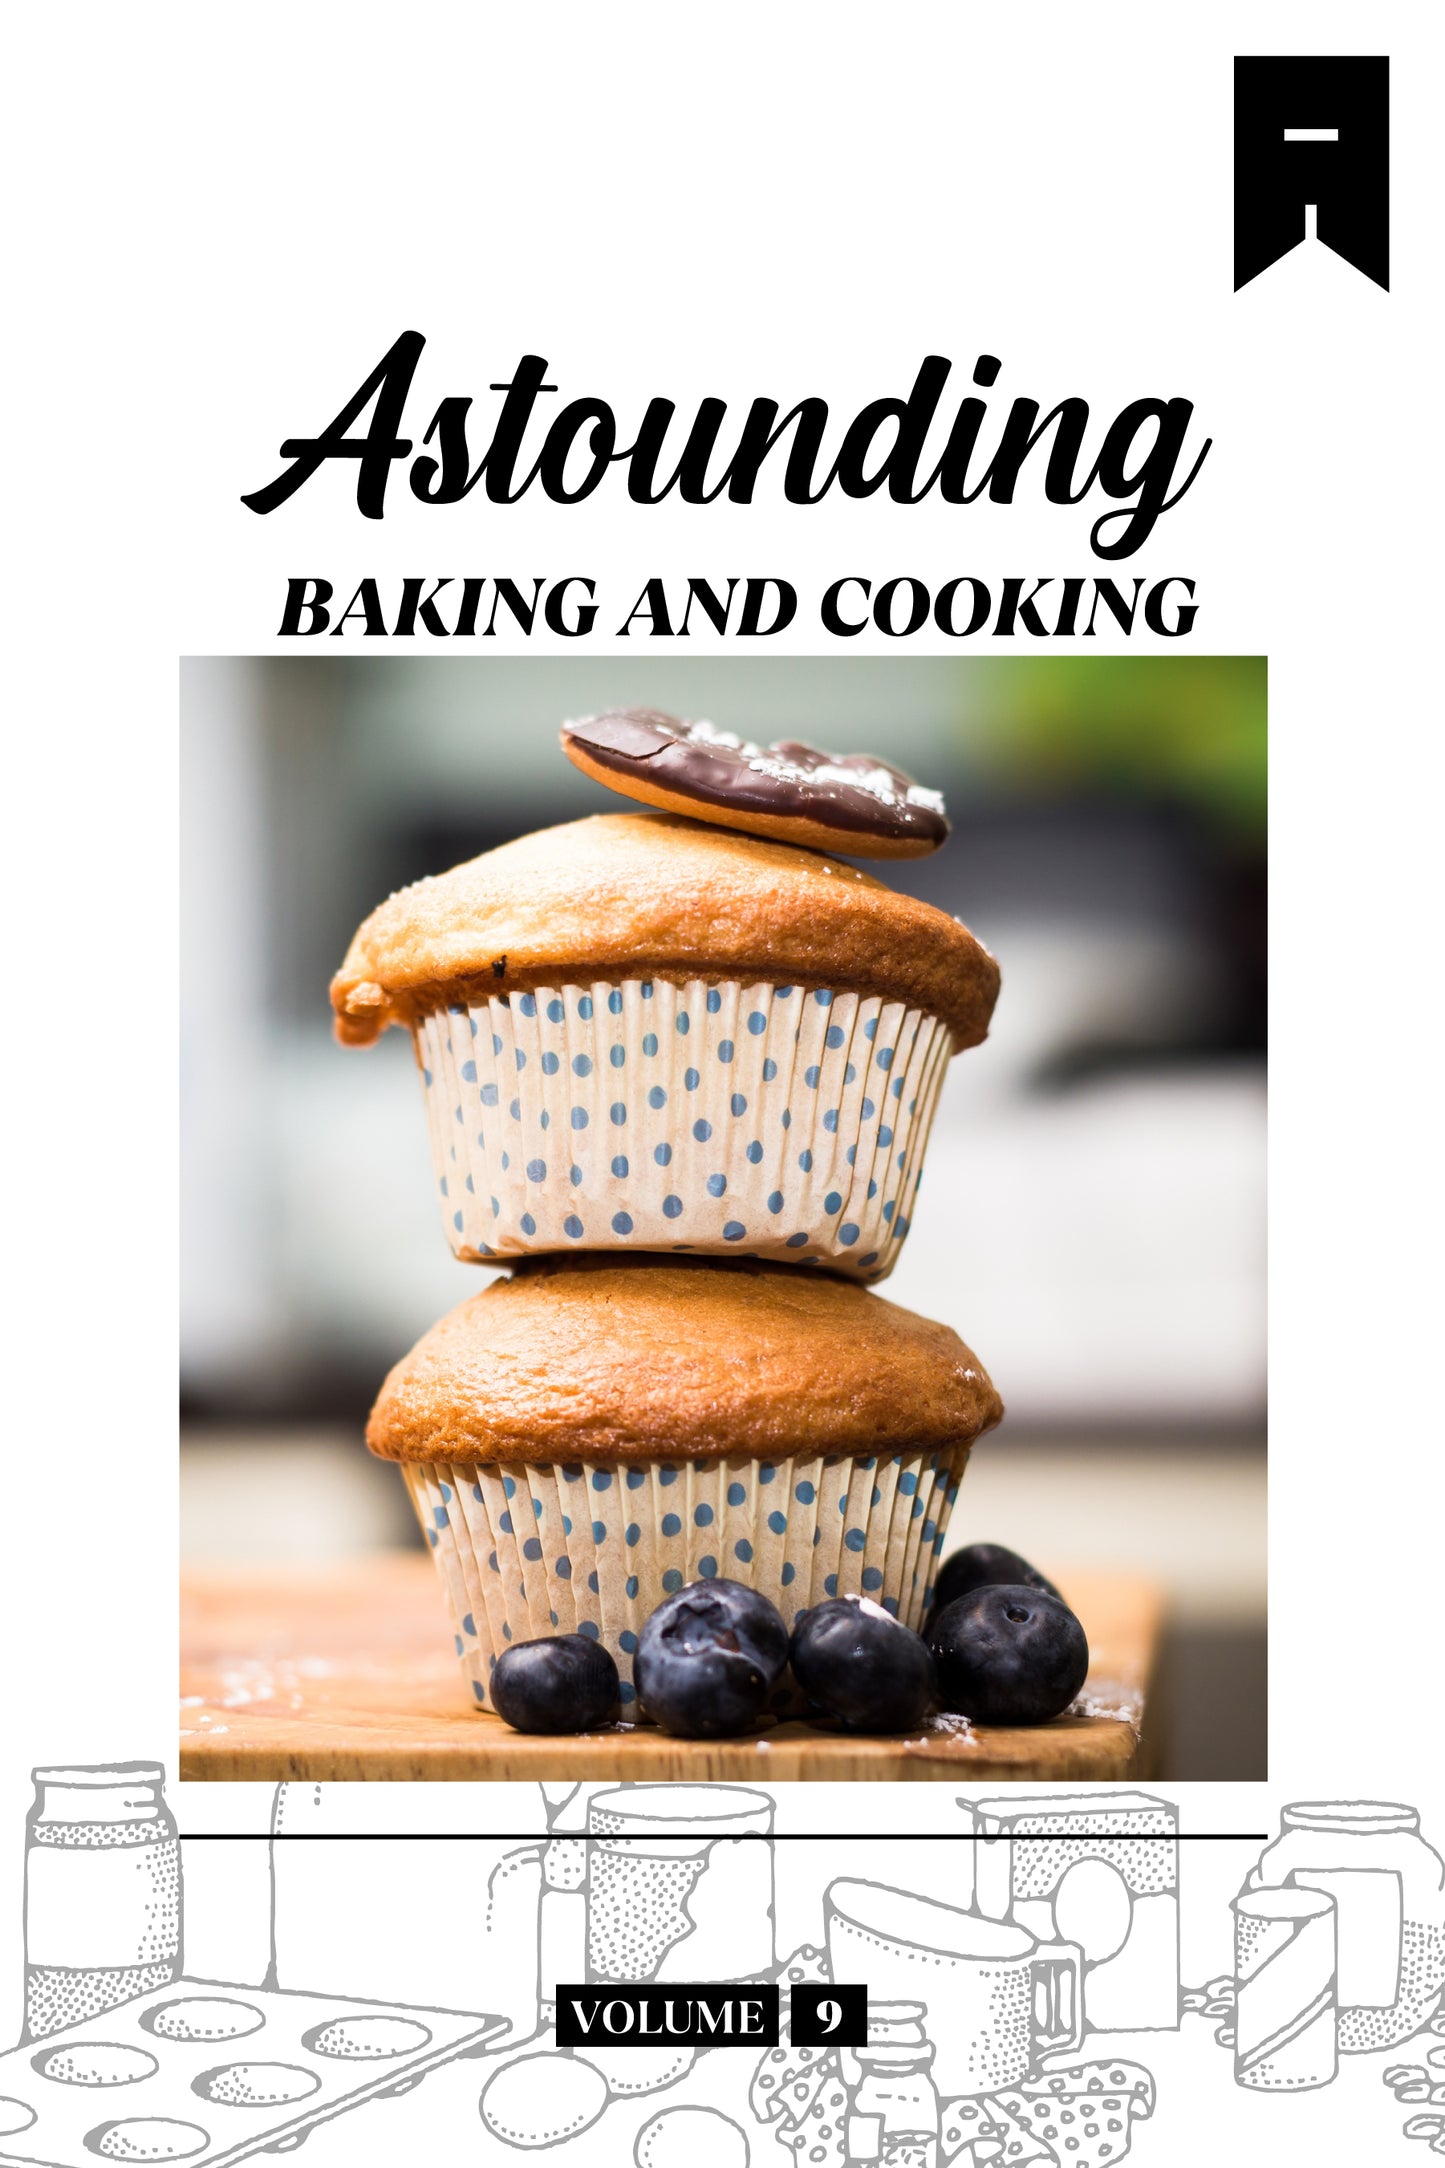 Astounding Baking (Volume 9) - Physical Book